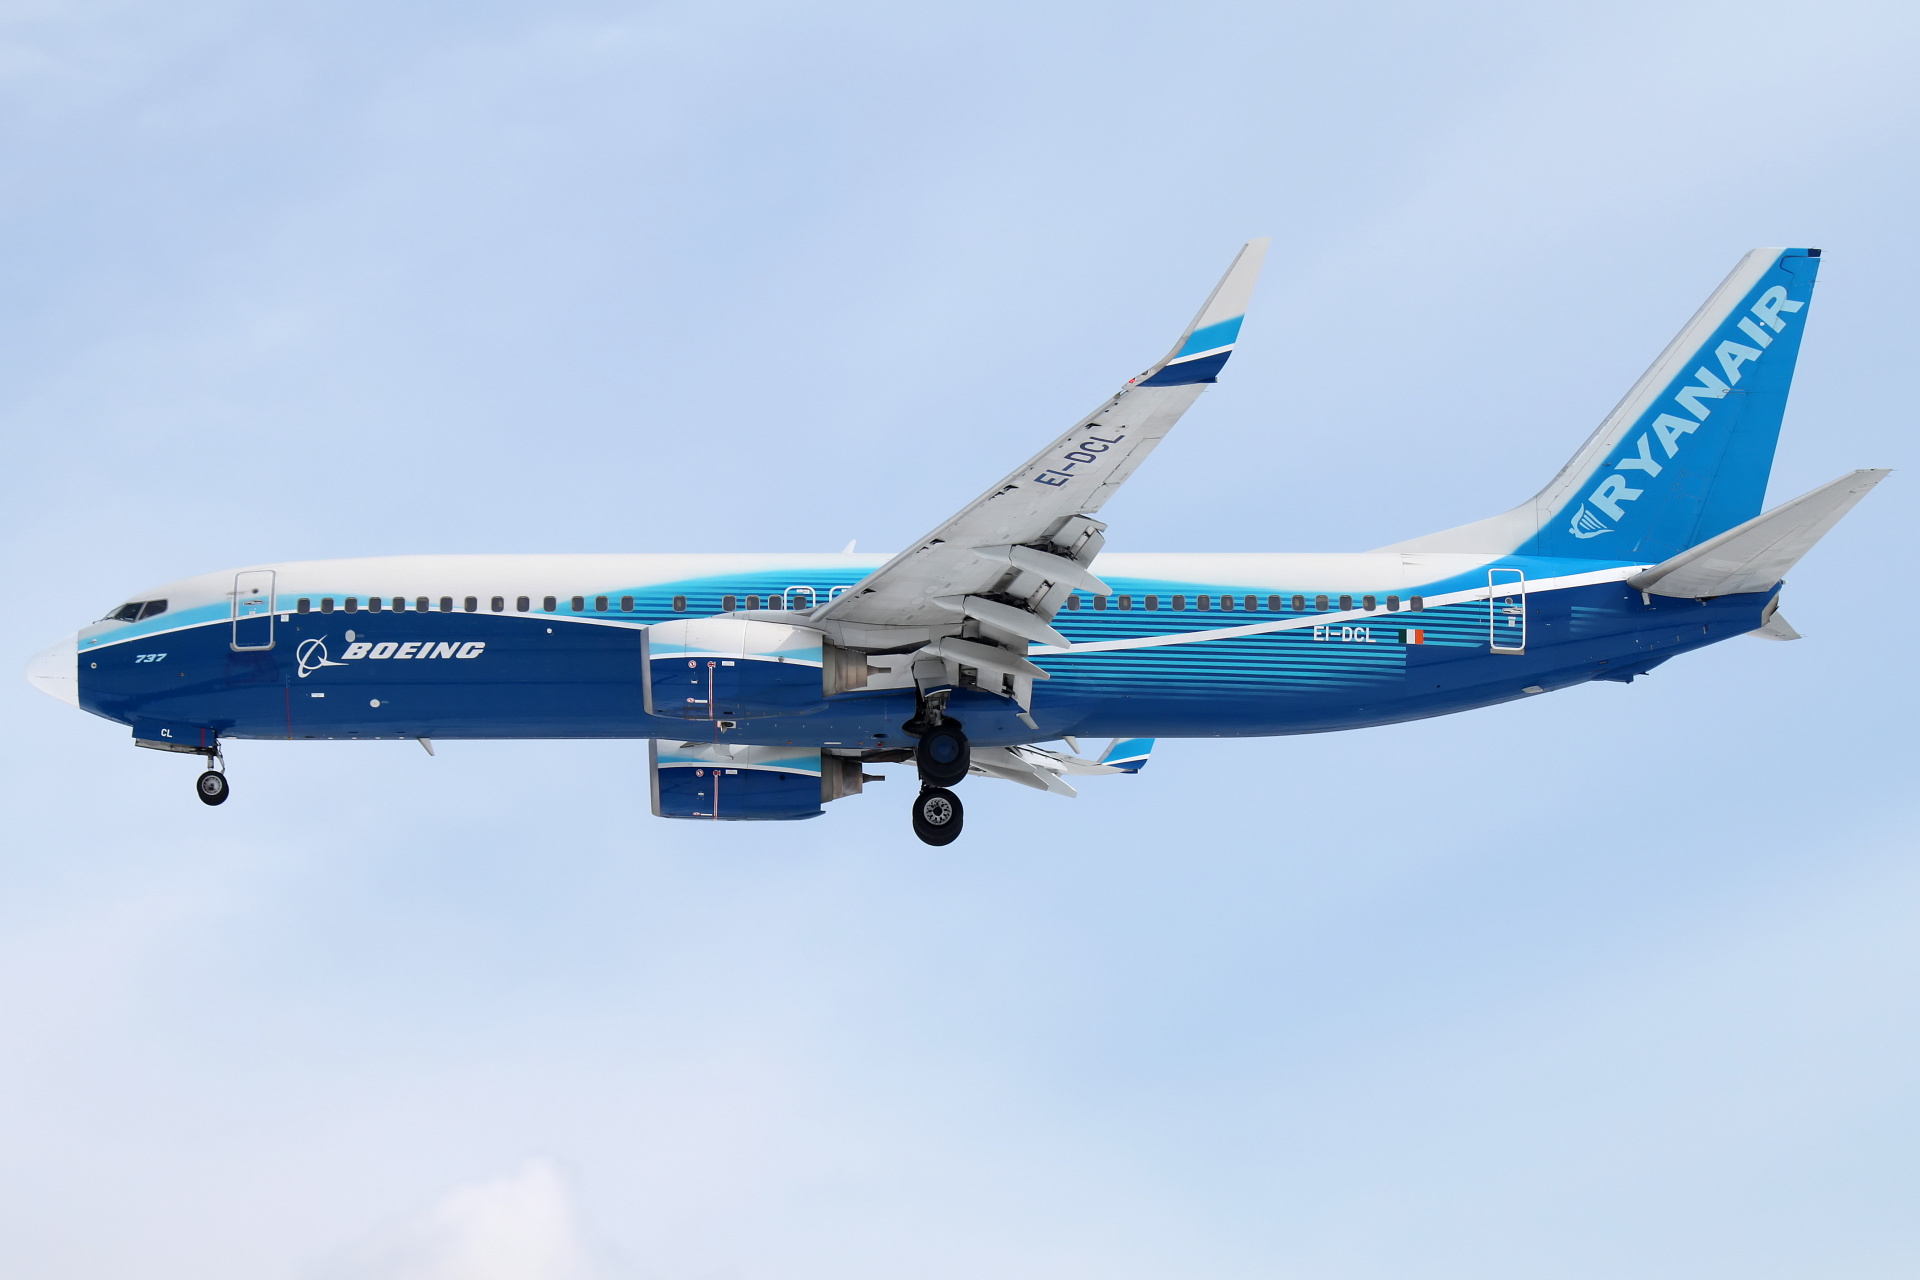 EI-DCL (dreamliner livery) (Aircraft » EPWA Spotting » Boeing 737-800 » Ryanair)